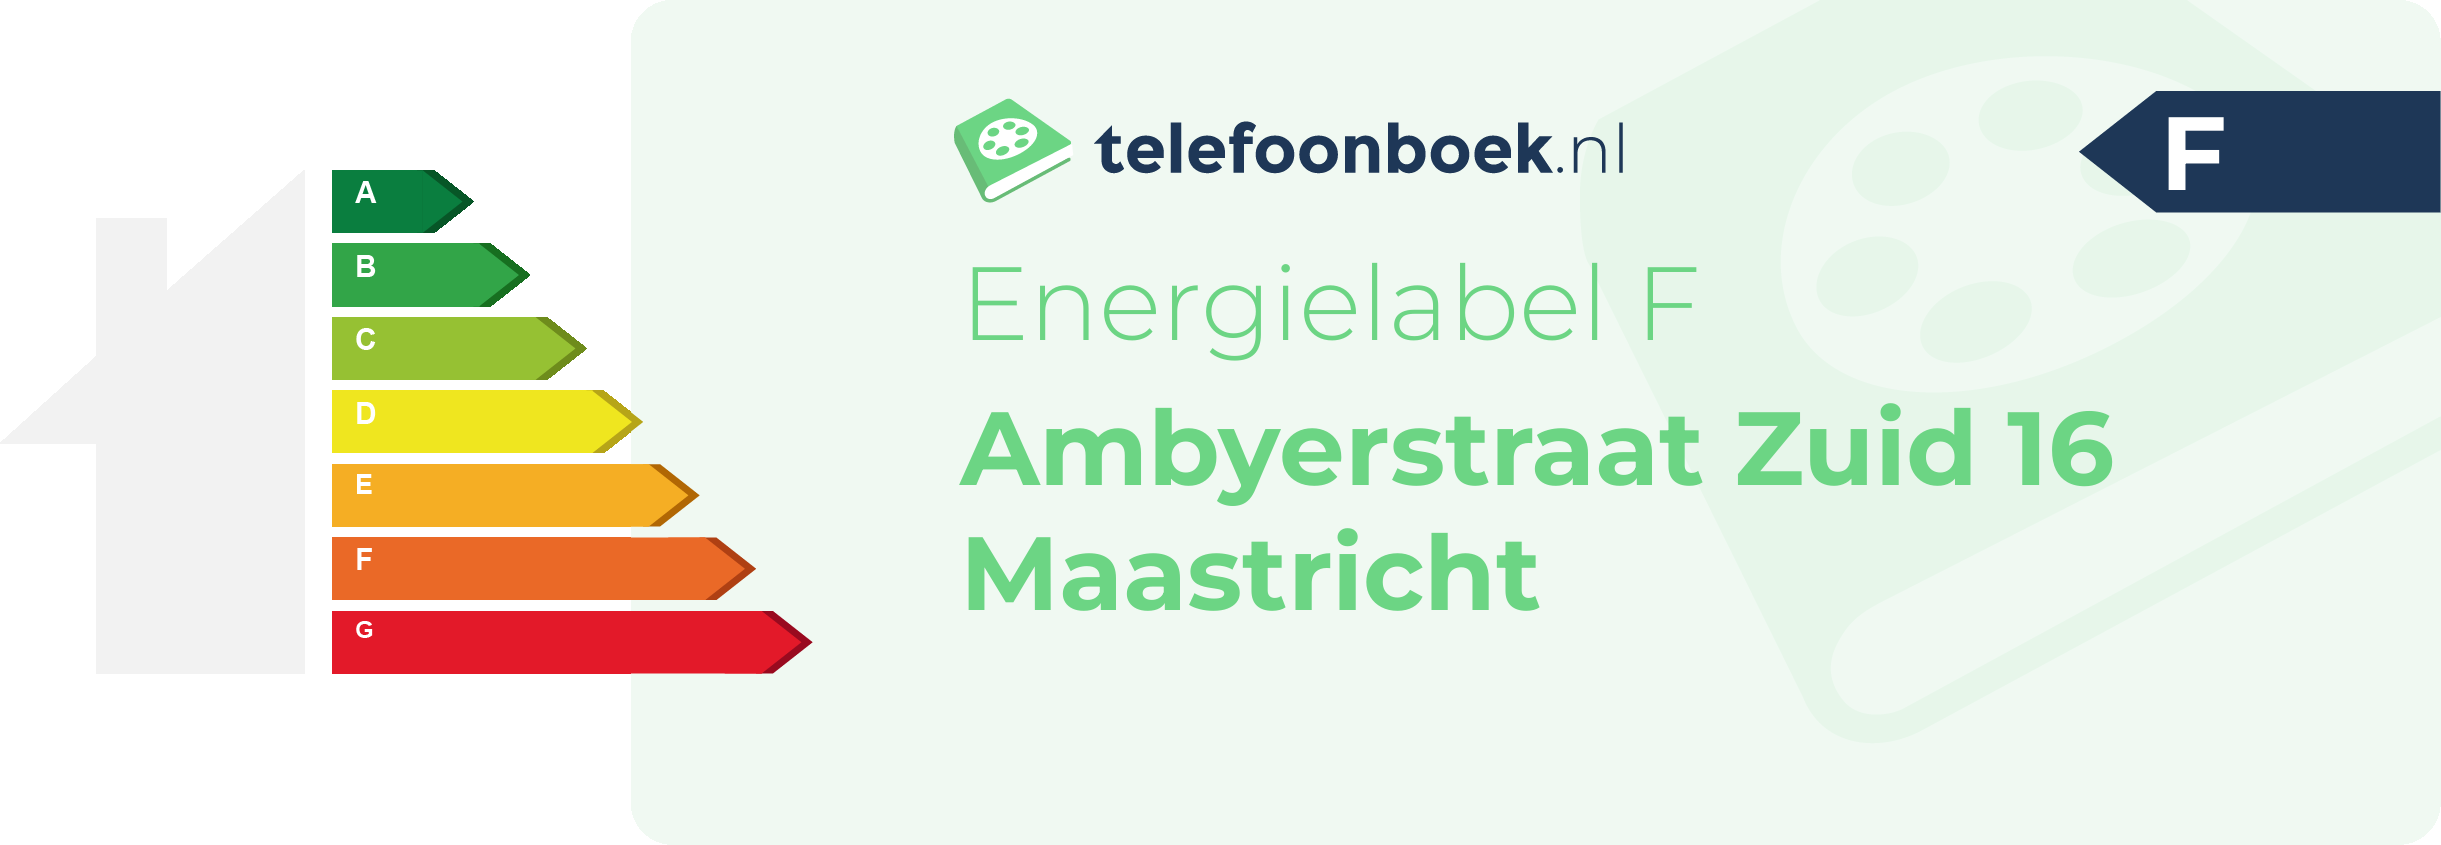 Energielabel Ambyerstraat Zuid 16 Maastricht